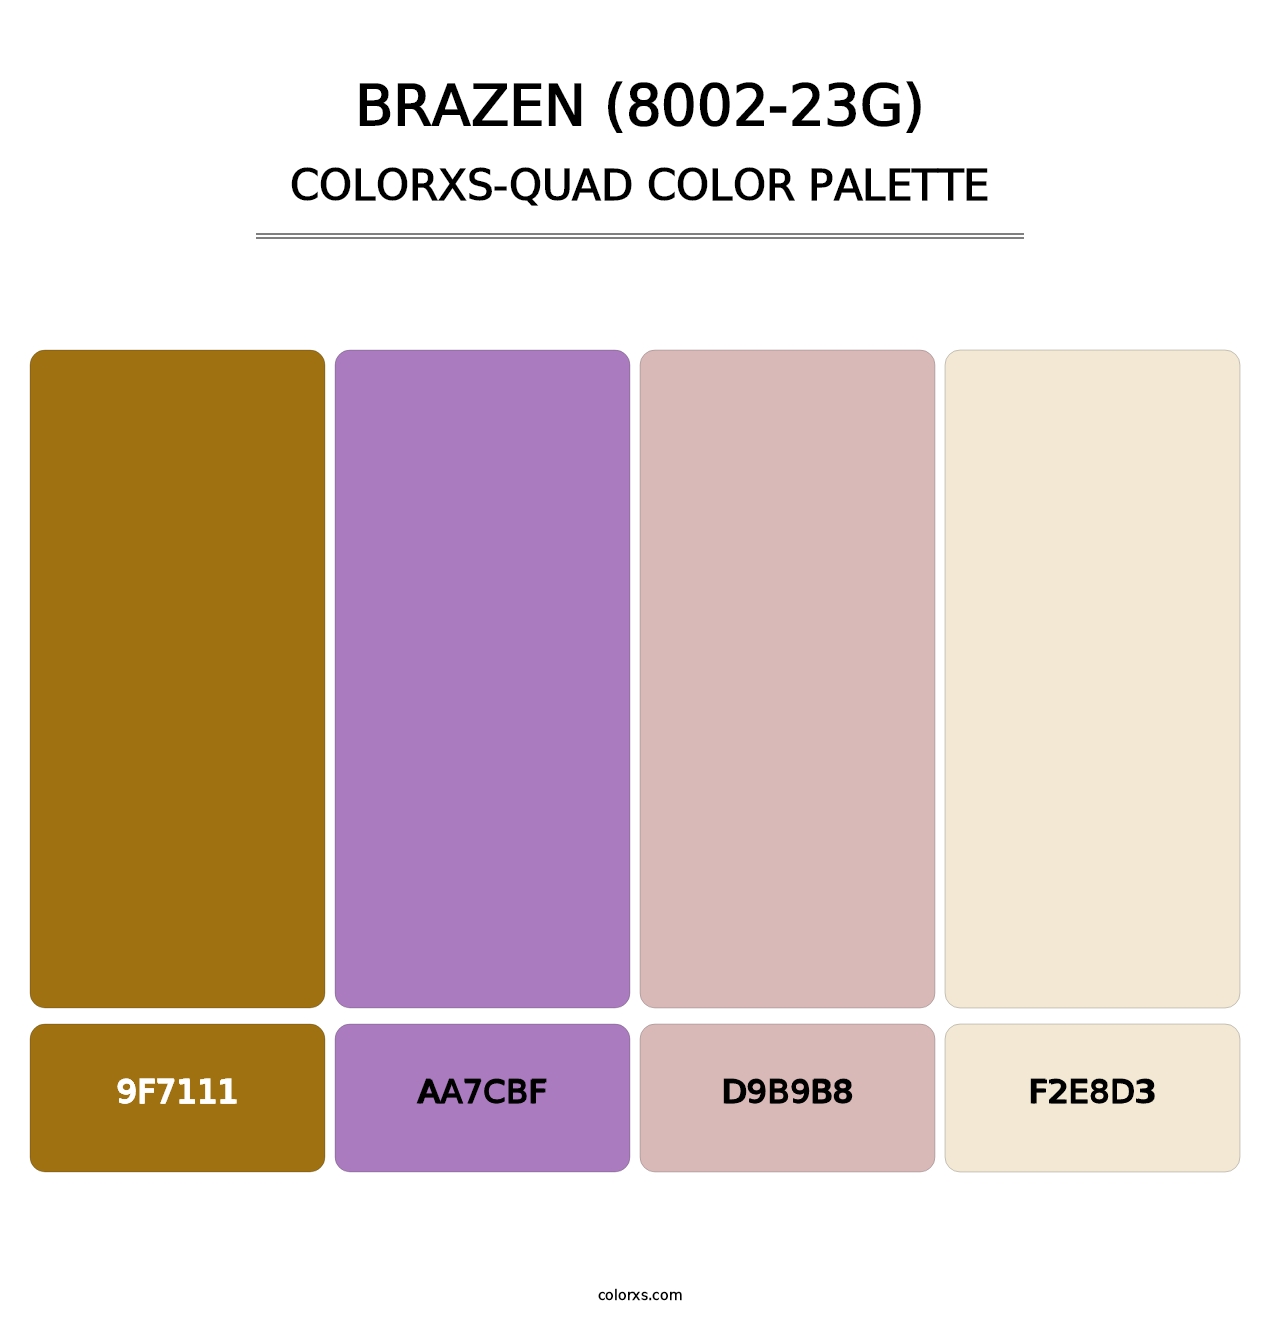 Brazen (8002-23G) - Colorxs Quad Palette